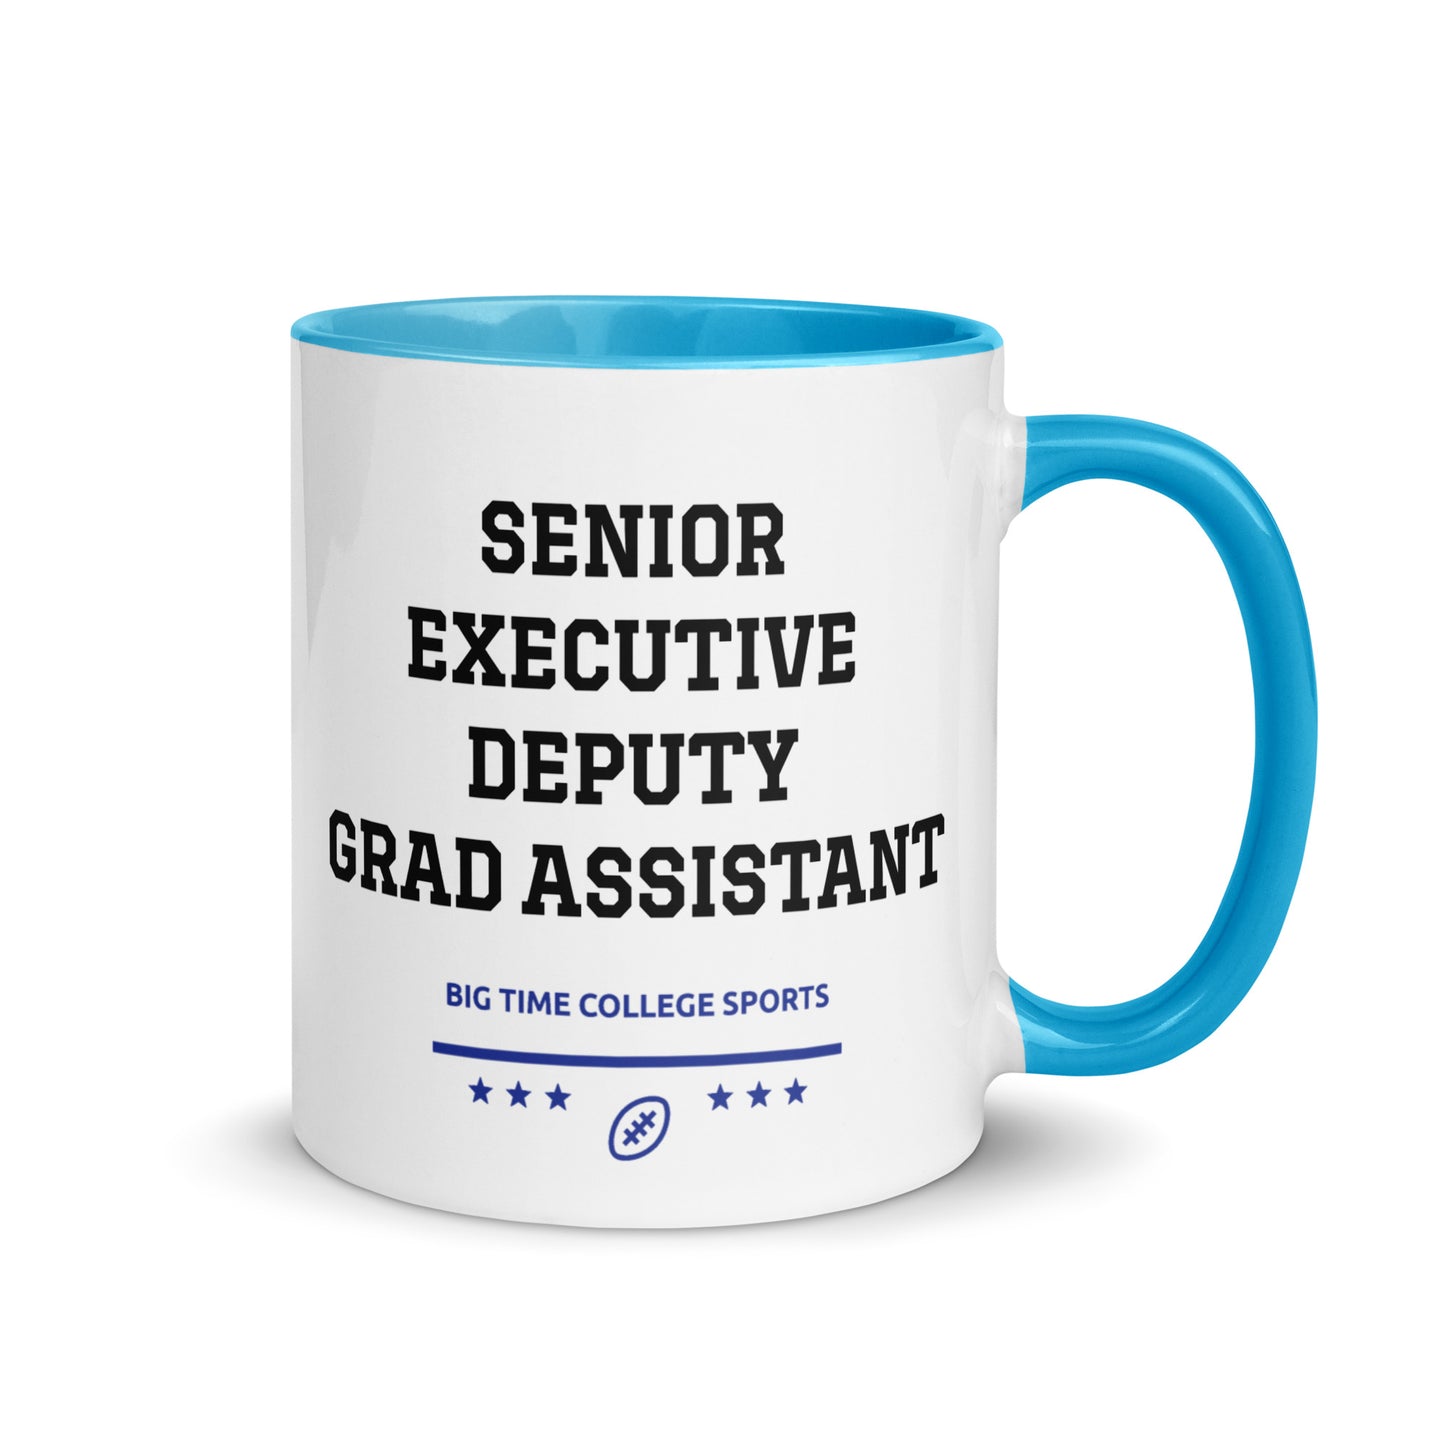 Senior Executive Deputy Grad. Assistant Mug